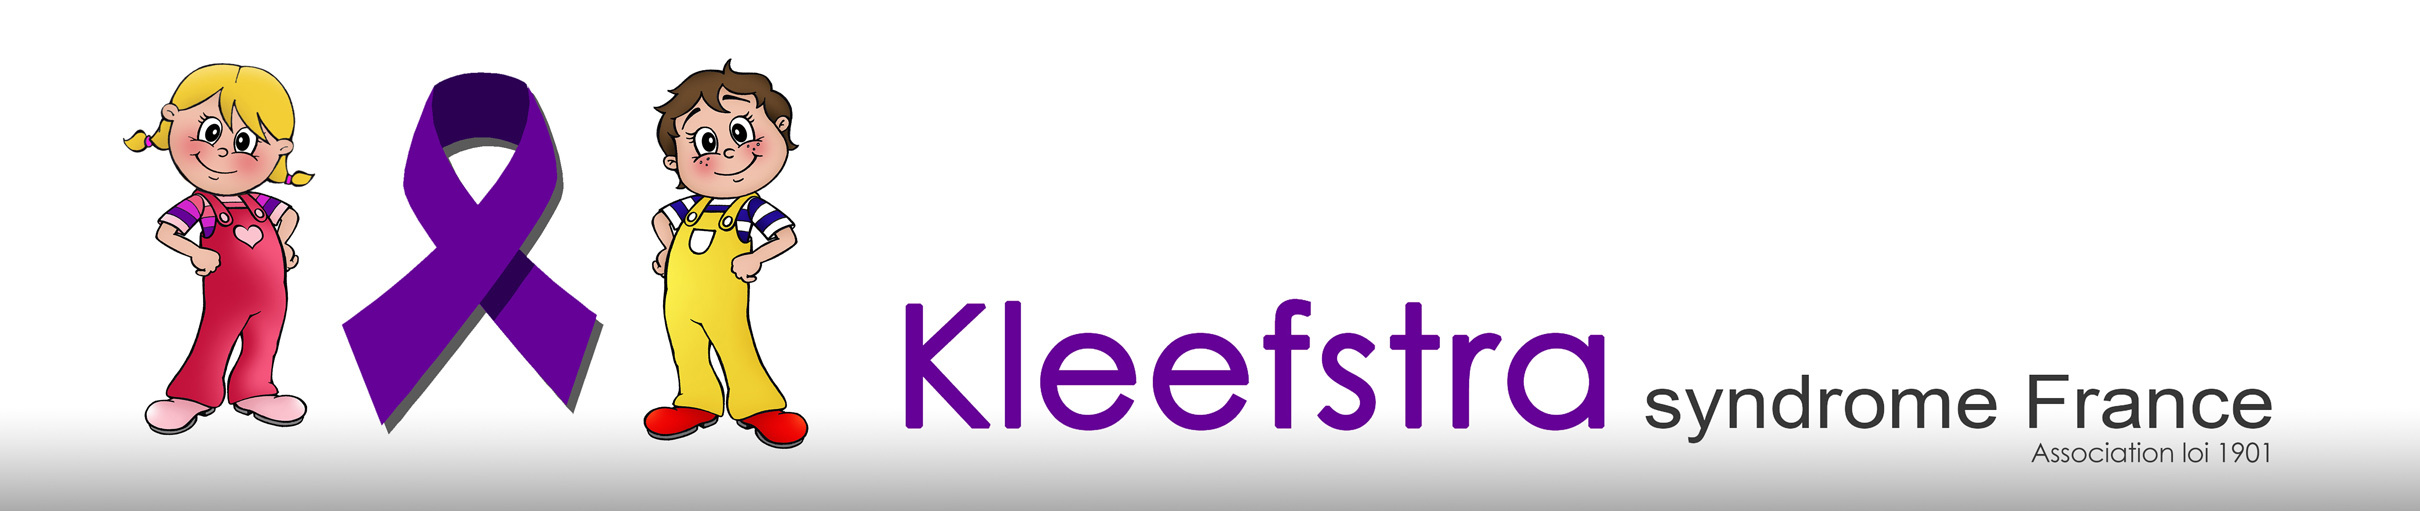 www.kleefstrasyndrome.fr